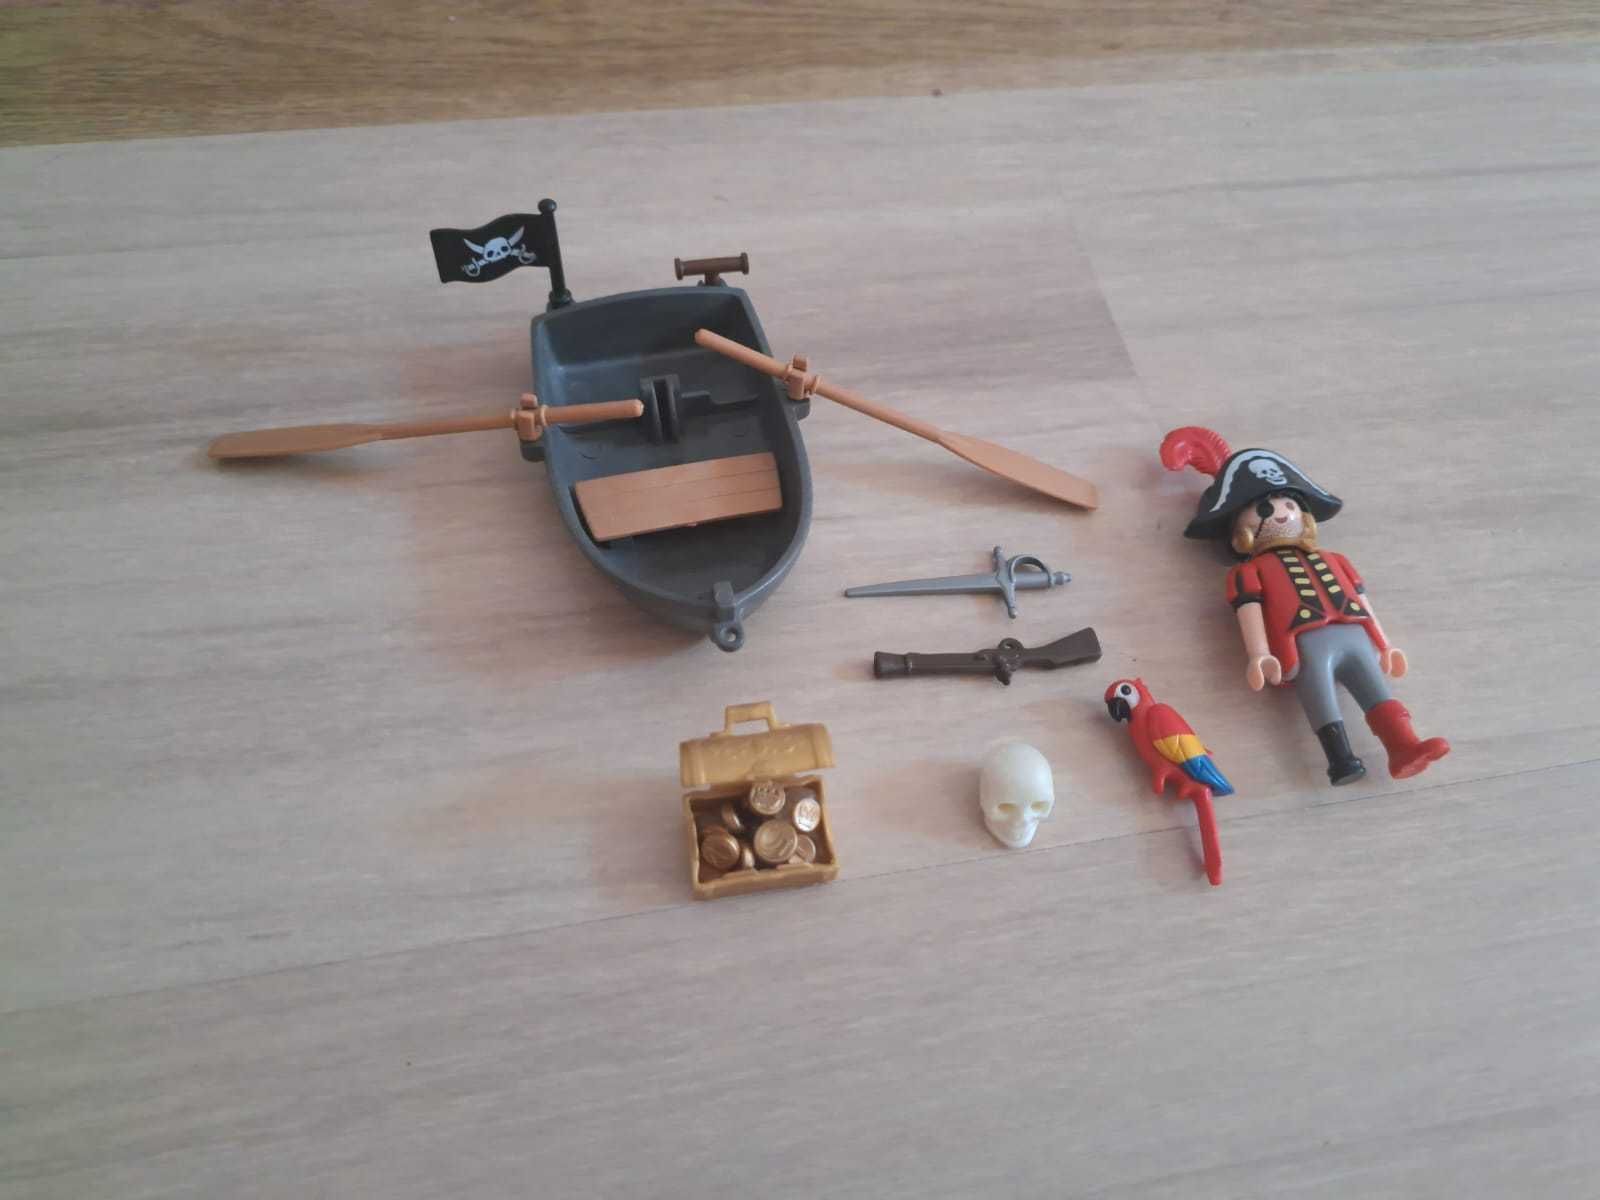 2. Playmobile barca mica de pirati